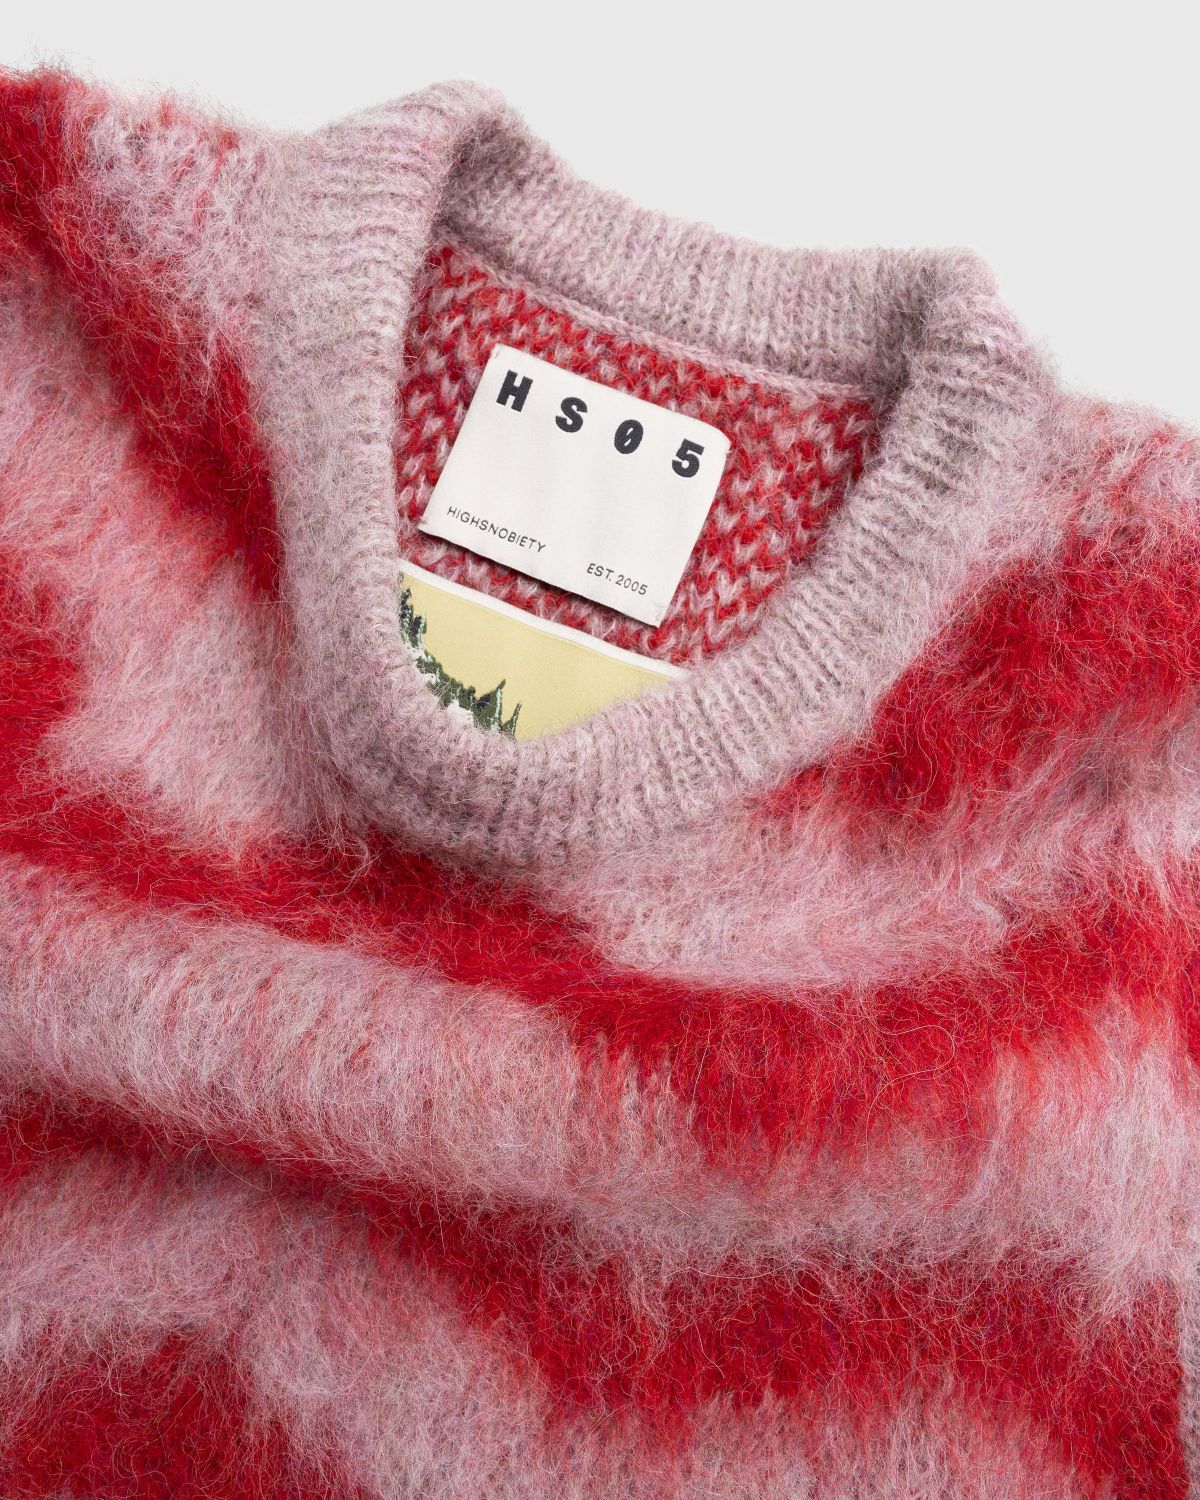 Highsnobiety HS05 – Alpaca Fuzzy Wave Sweater Vest Pale Rose/Red - Knitwear - Multi - Image 6